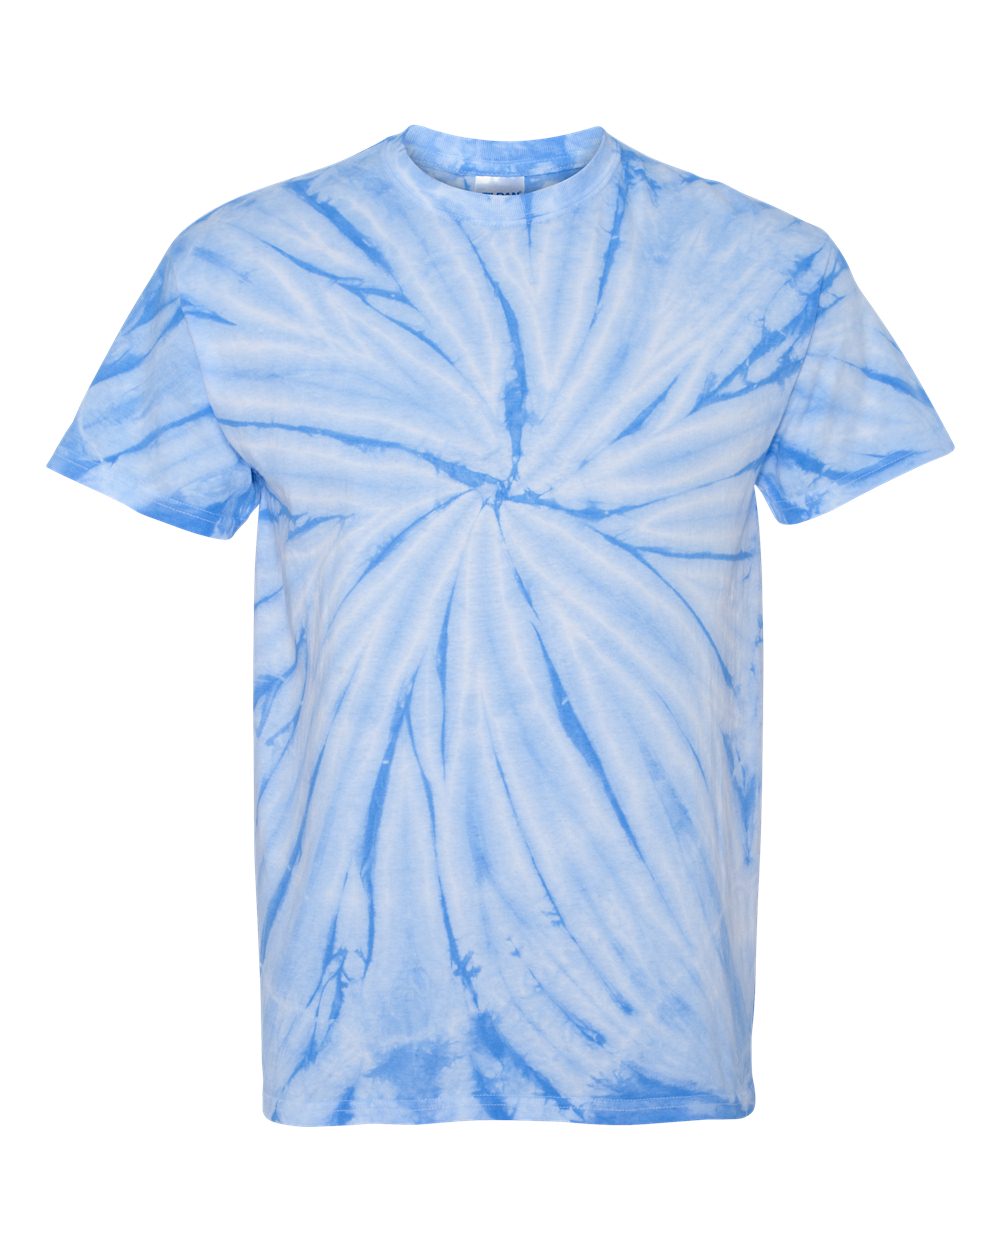 Franklin School Tie Dye t-shirt Design 5